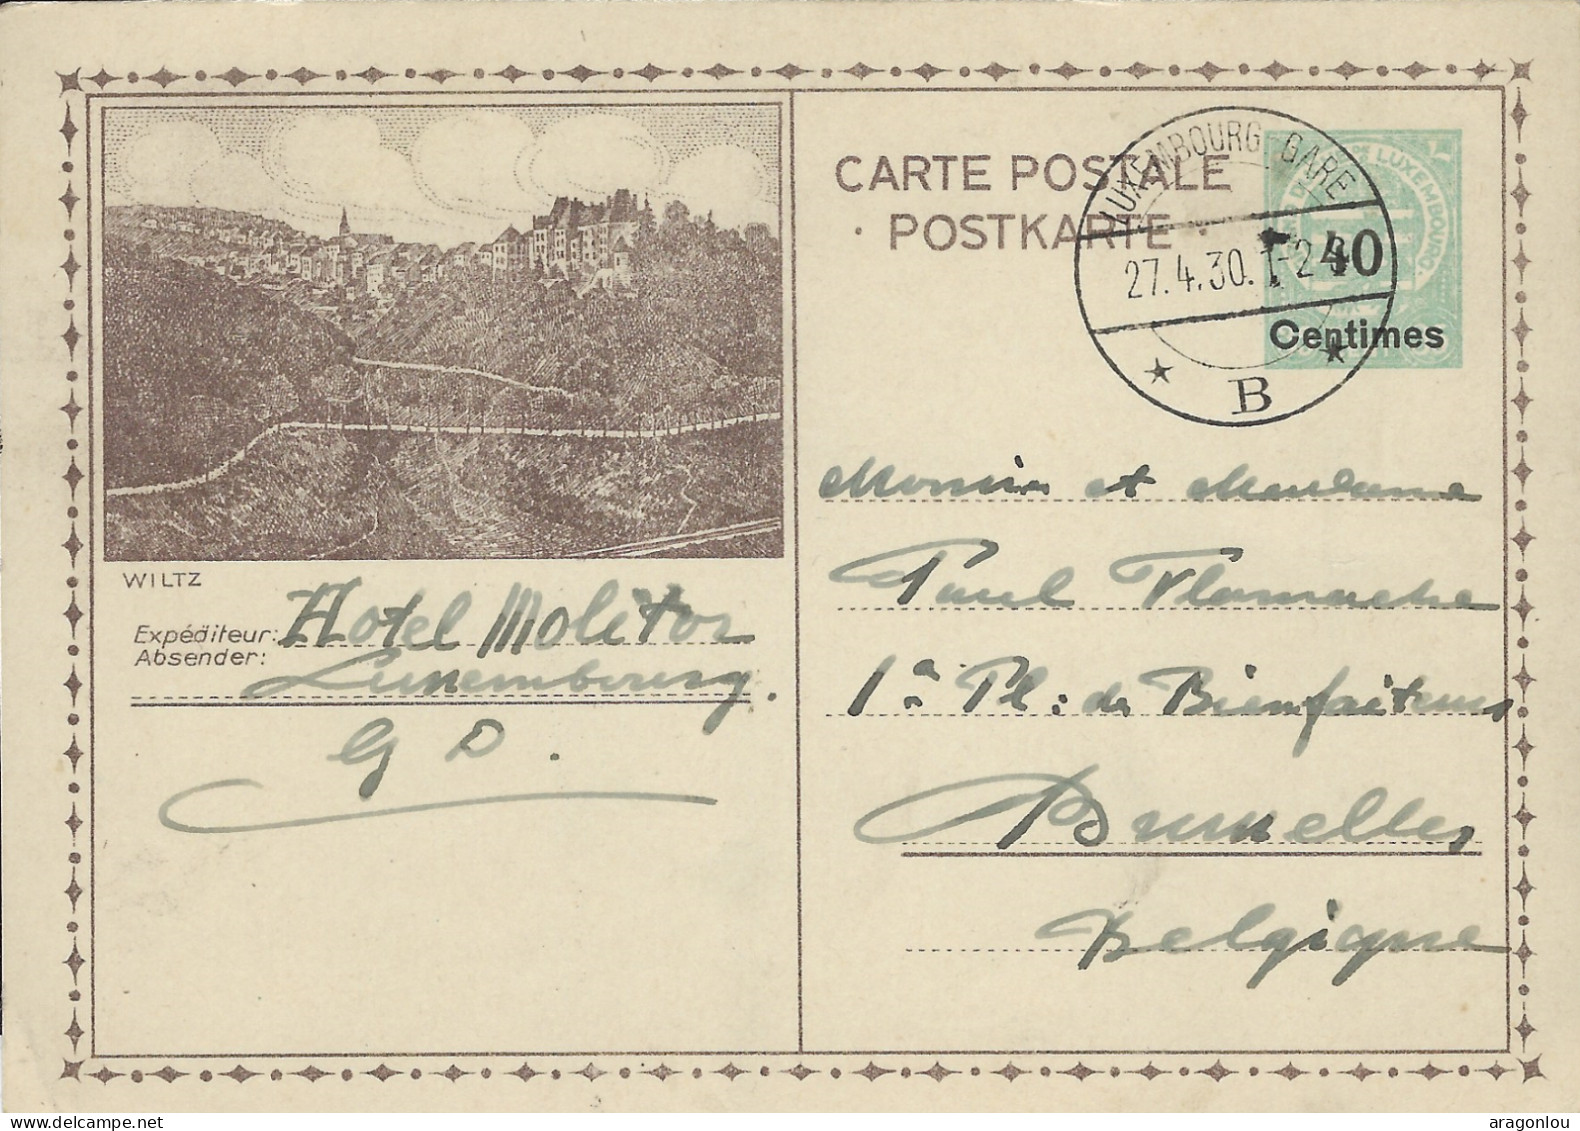 Luxembourg - Luxemburg - Carte-Postale  1930  -  Wiltz  -   Cachet  Luxembourg - Entiers Postaux